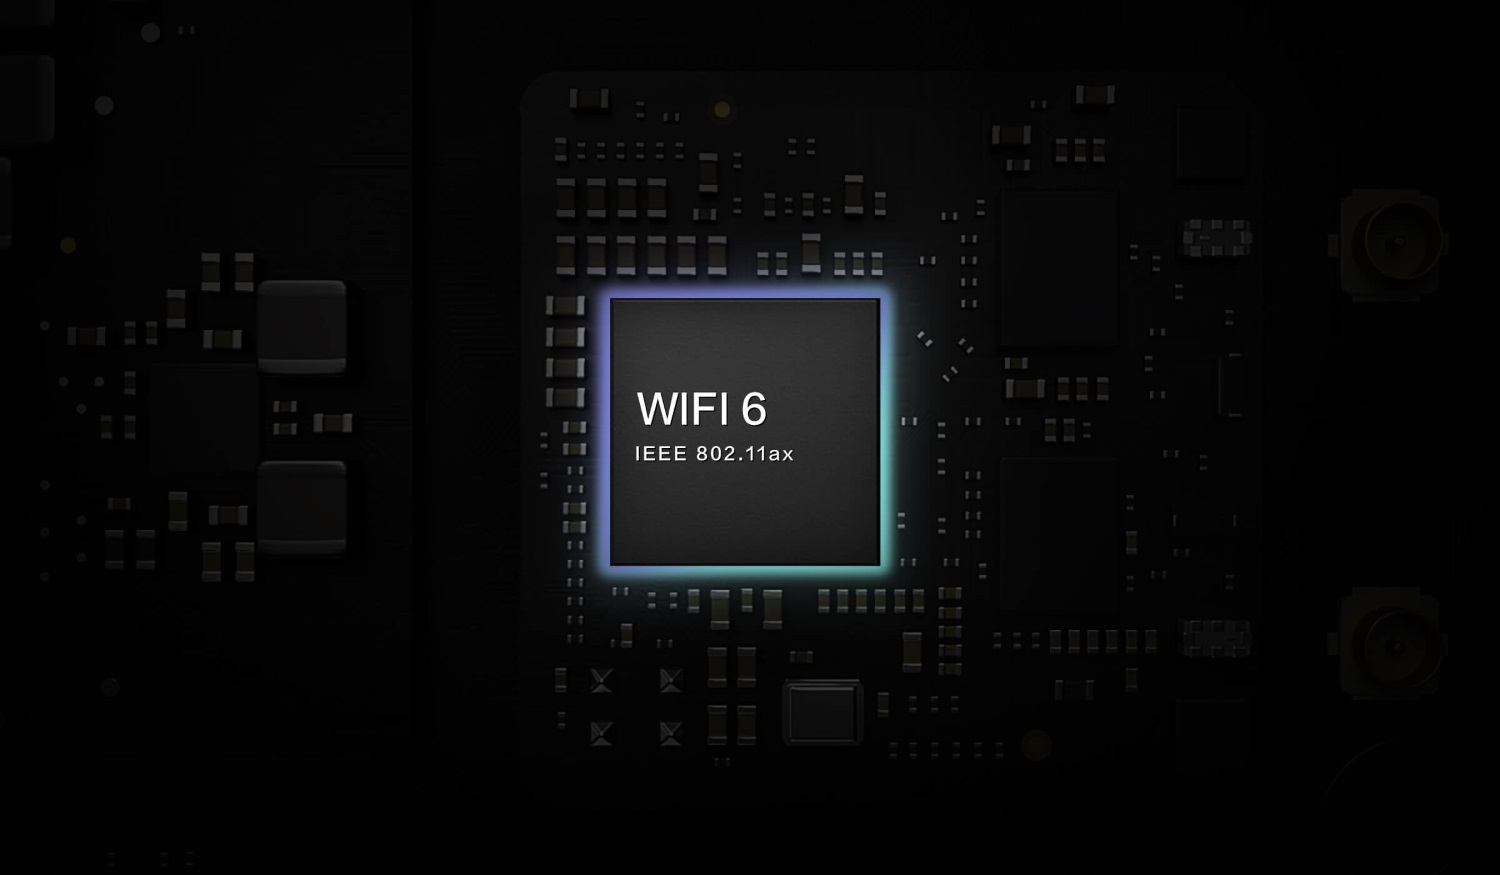 WiFI 6 chip